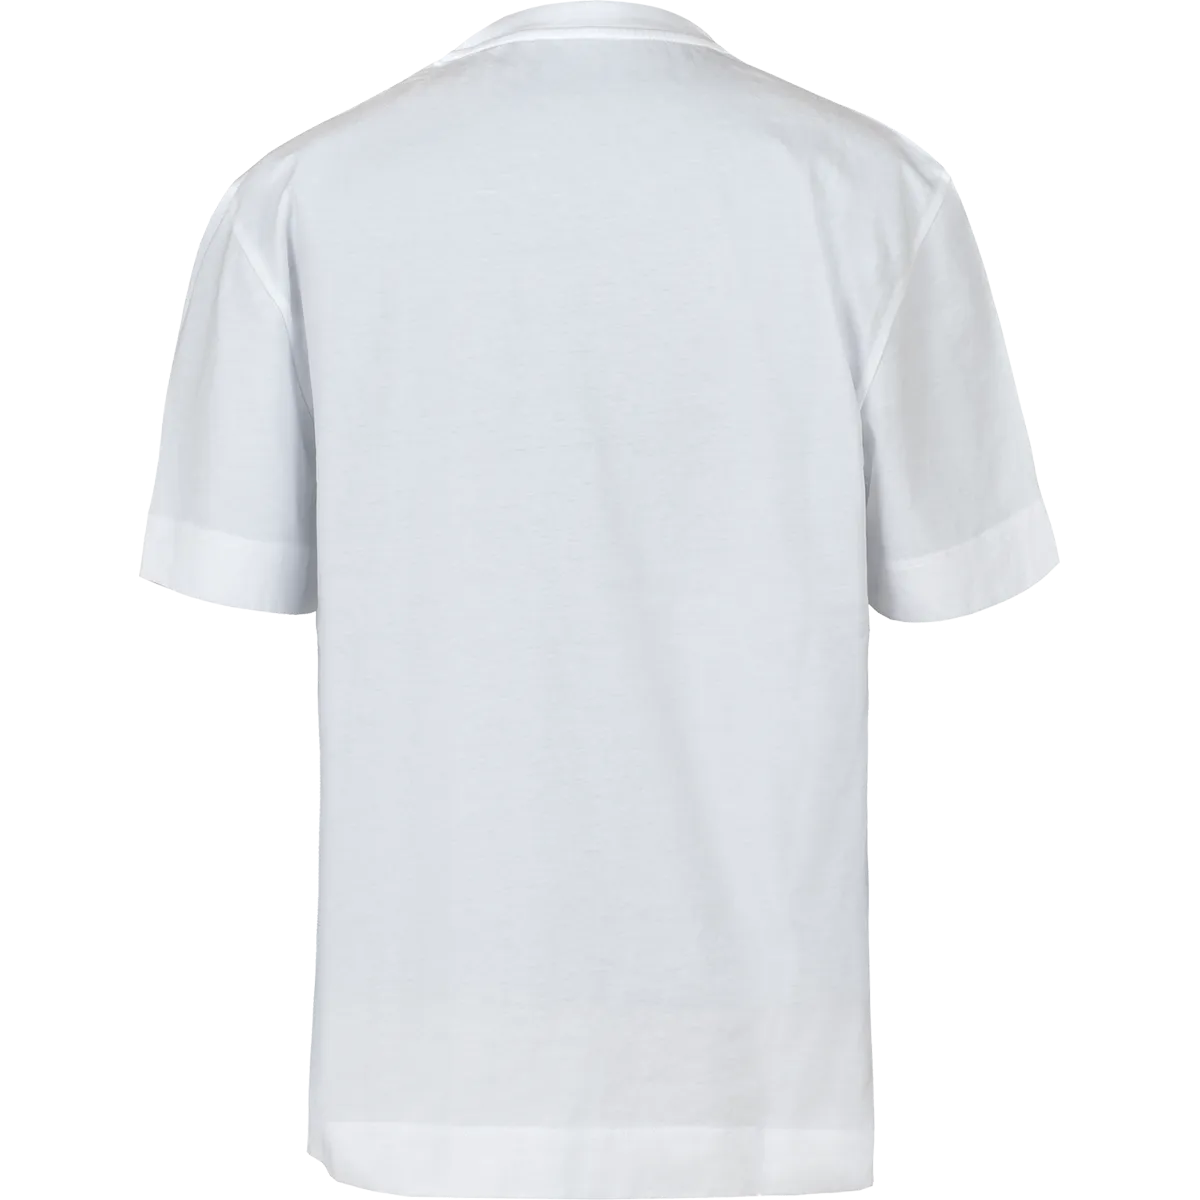 Футболки LYV Shirt артикул 31930010200